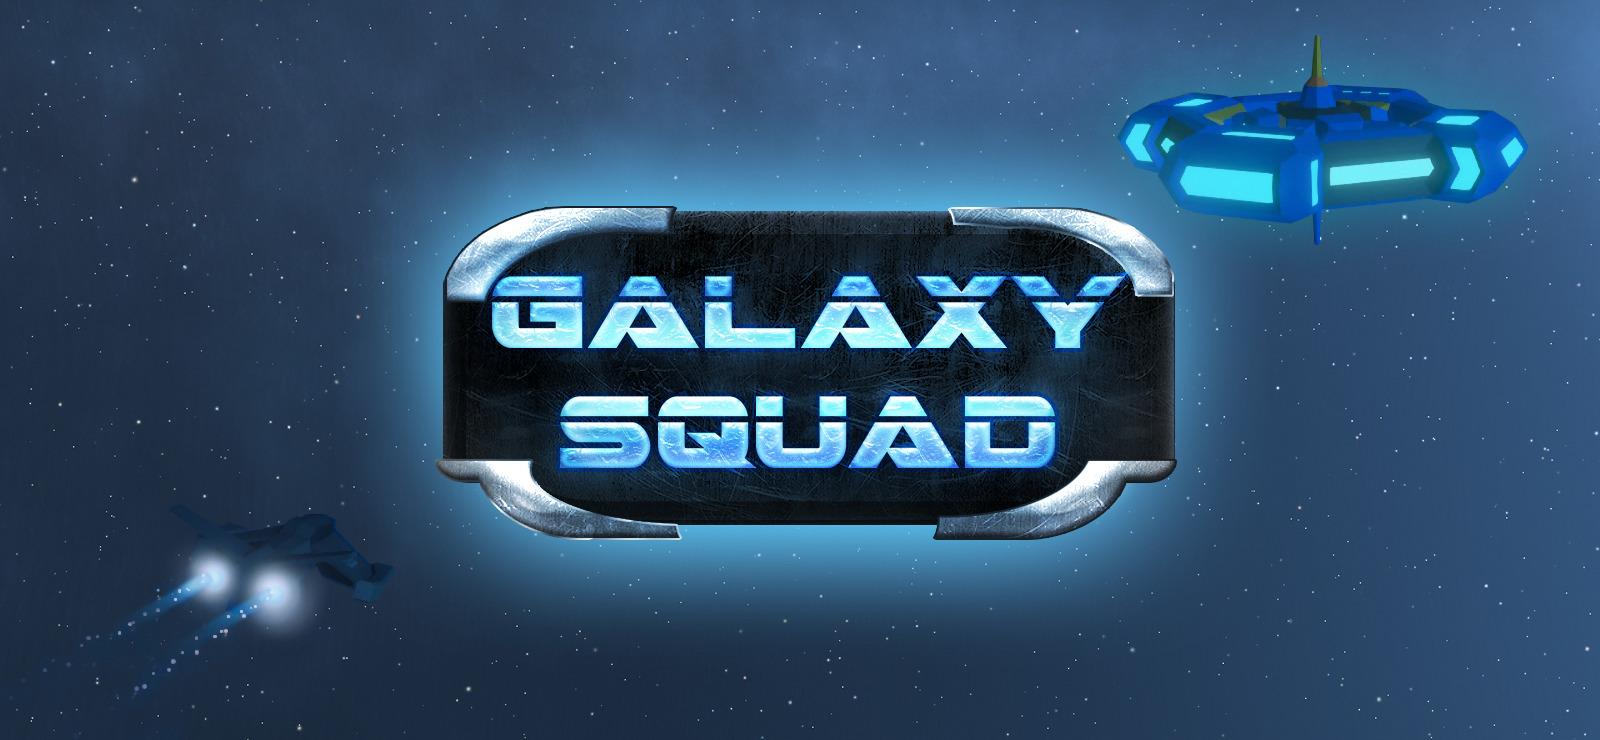 download lego galaxy squad game